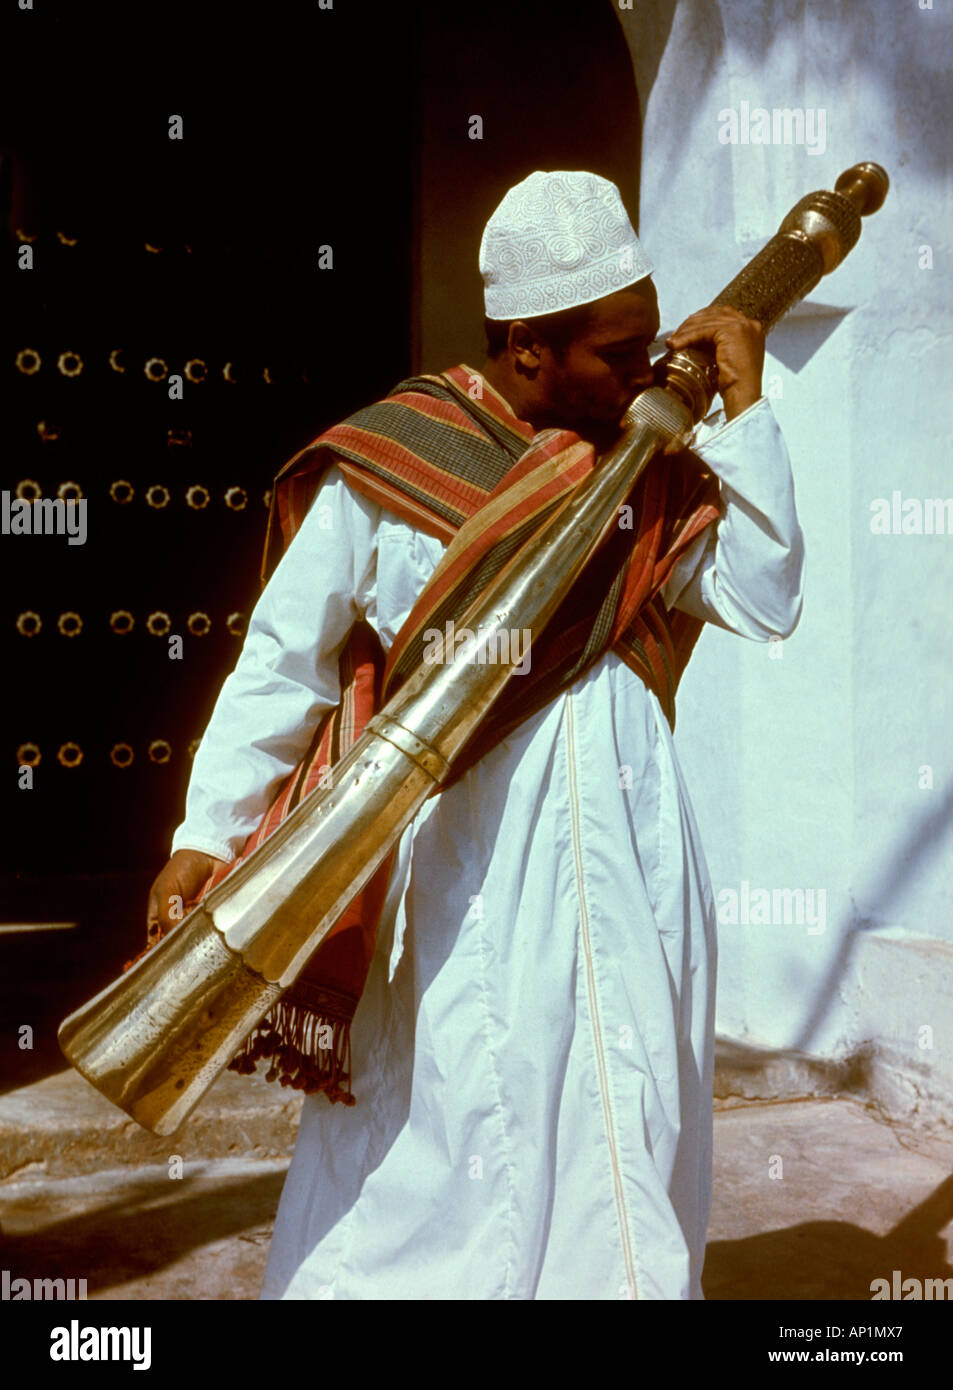 A Muslim man playing a SIWA or side blown horn Lamu island Kenya coast East Africa Stock Photo